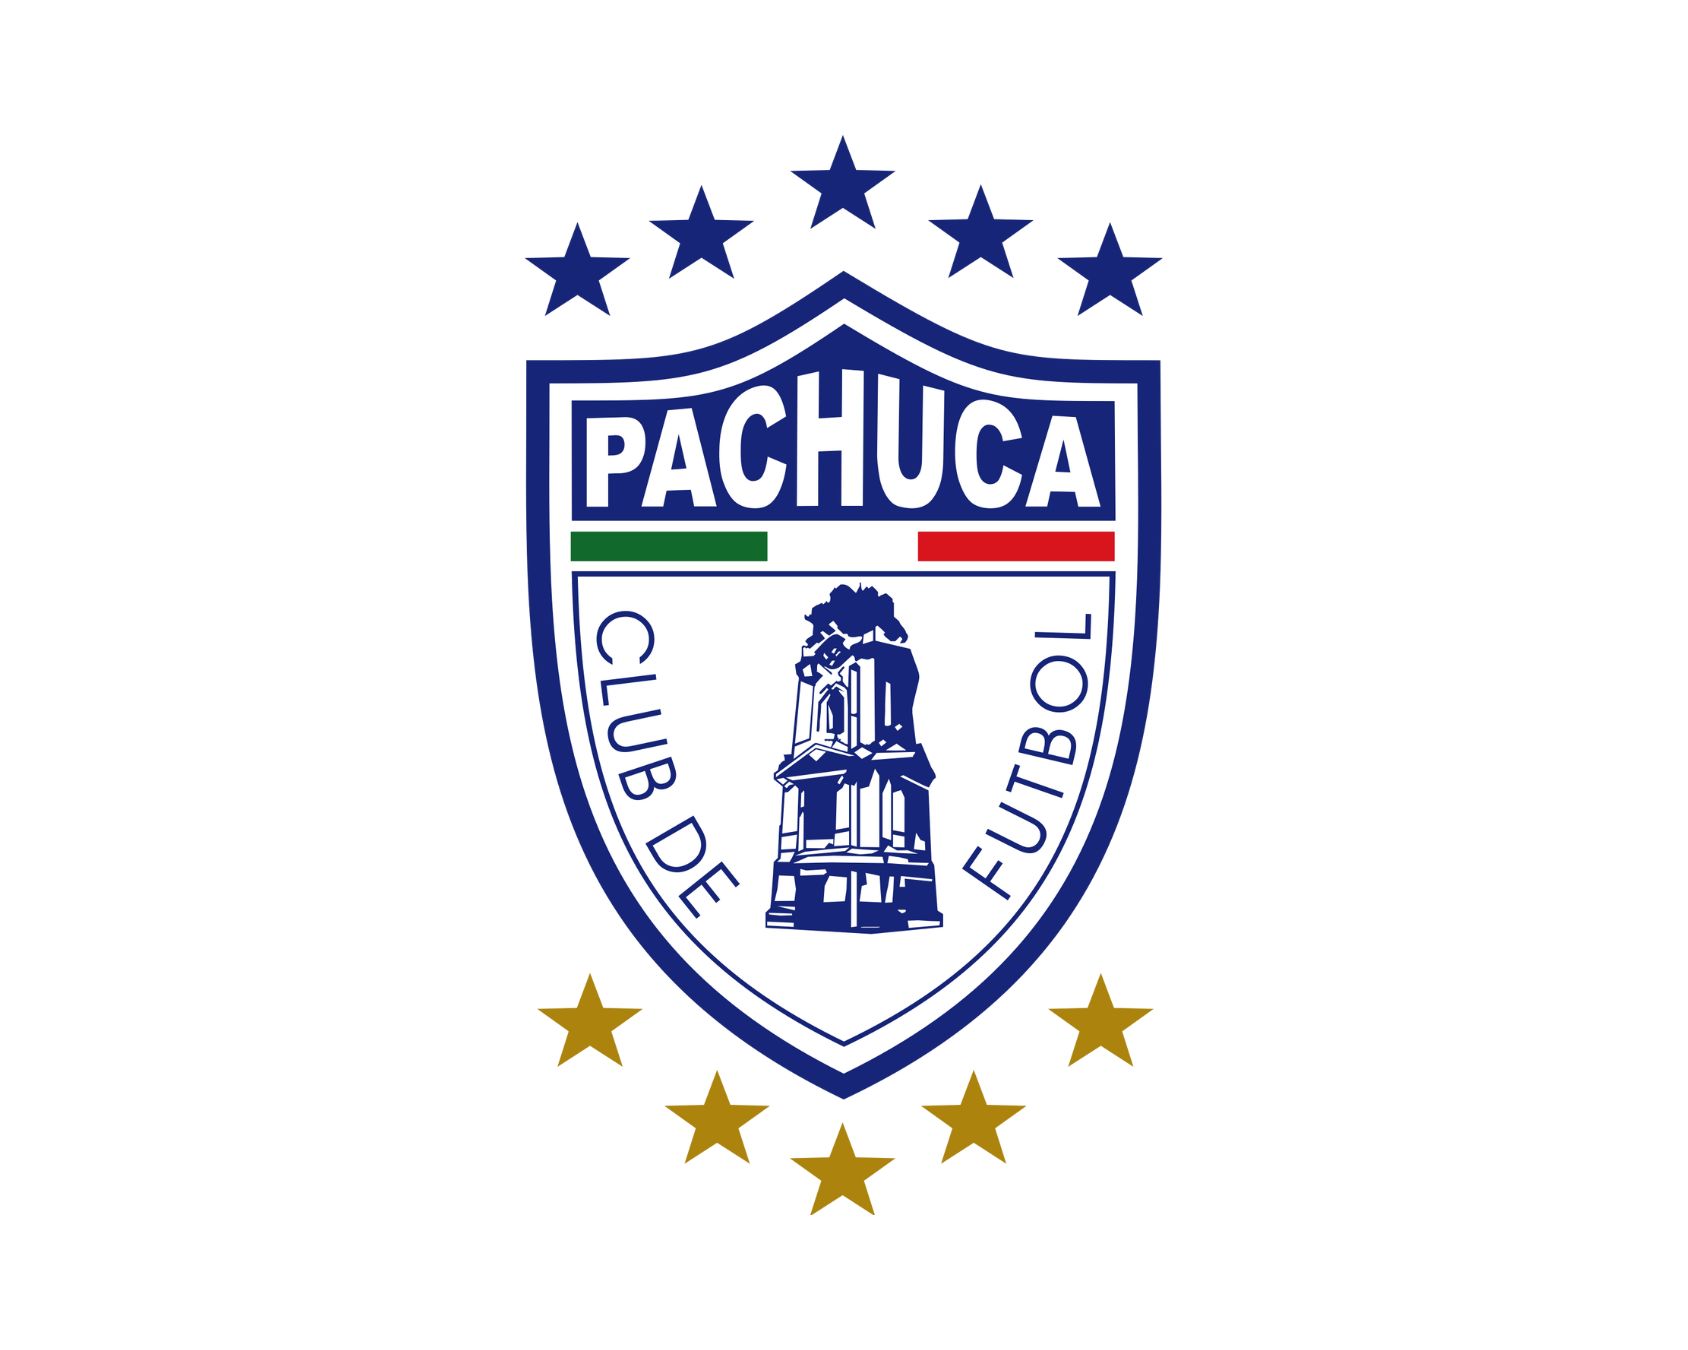 cf-pachuca-25-football-club-facts